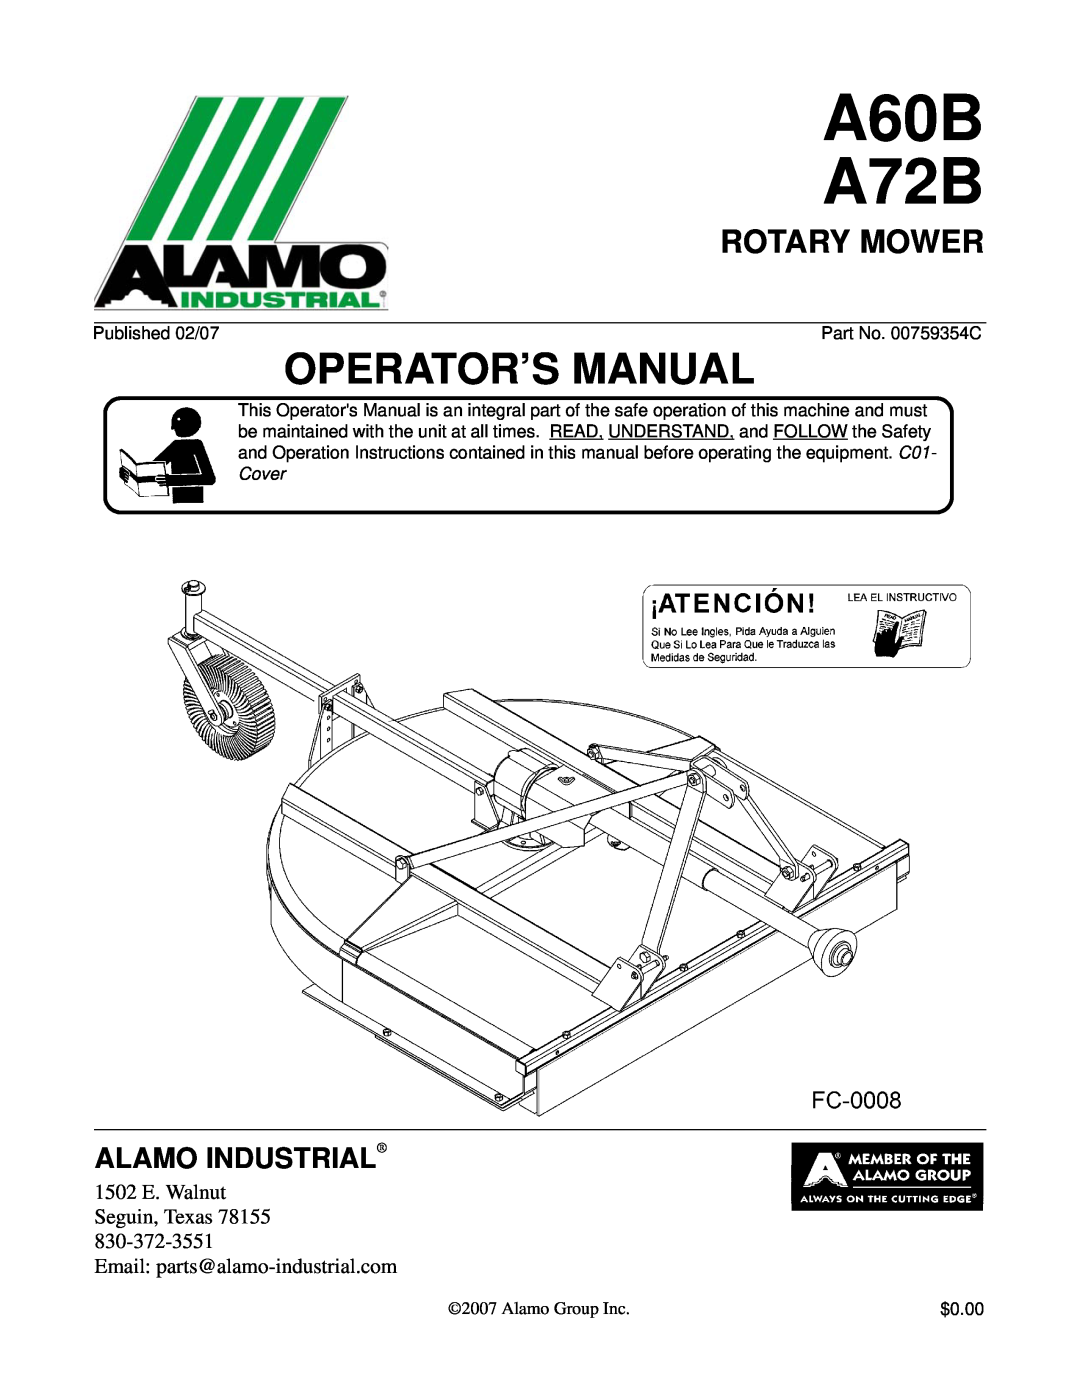 Alamo 00759354C manual A60B A72B, Rotary Mower, Alamo Industrial, Operator’S Manual 